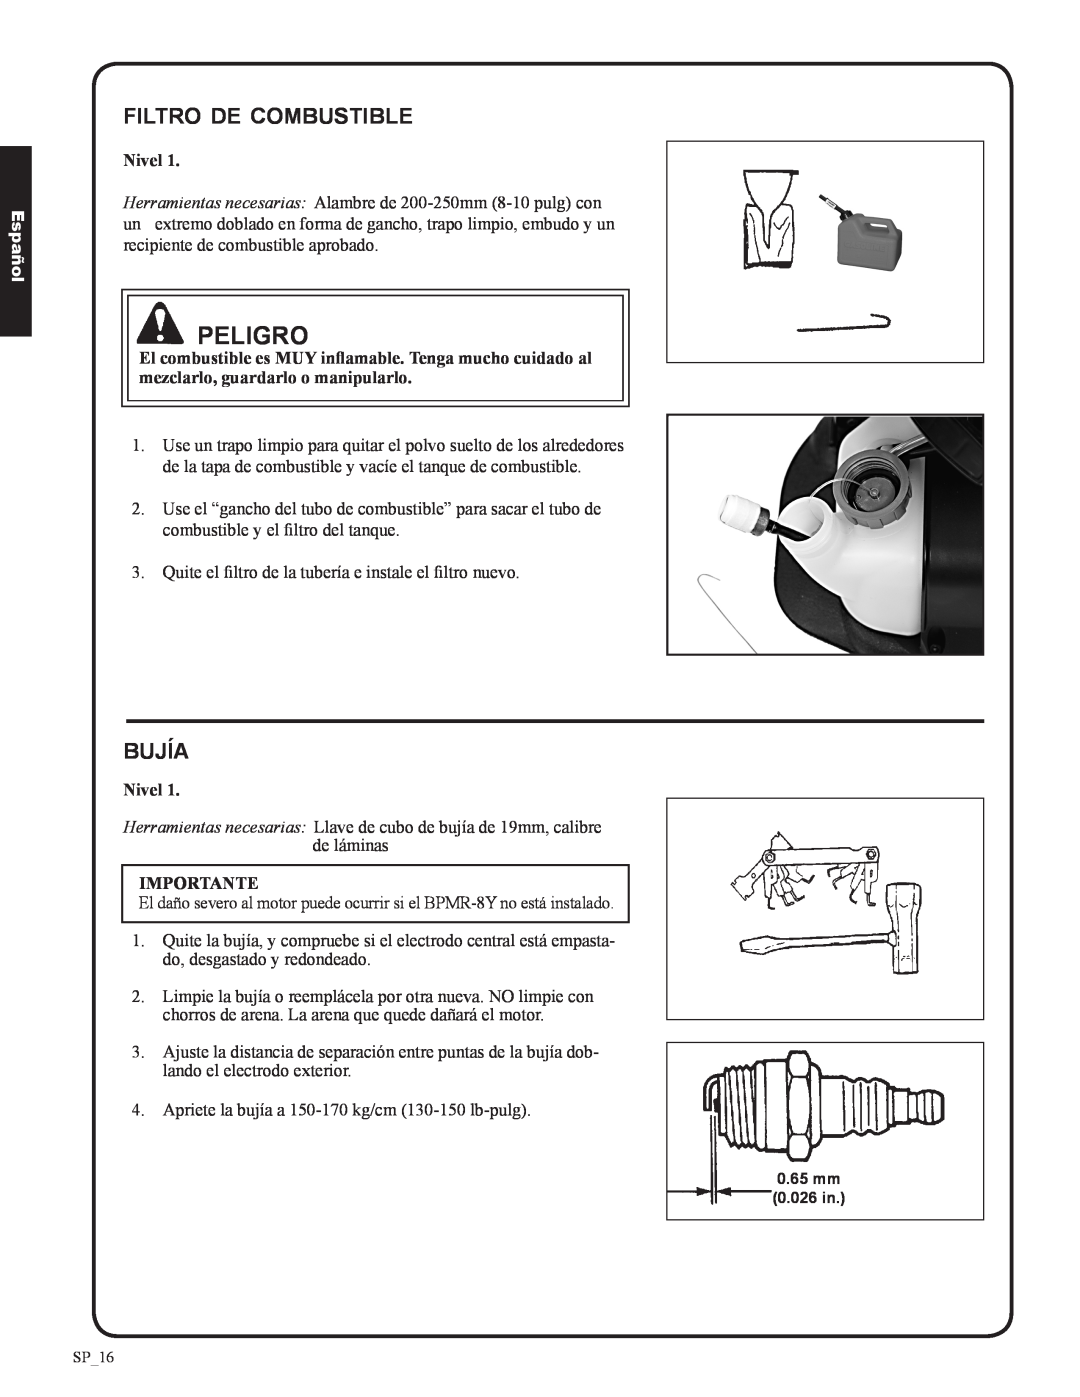 Shindaiwa EB633RT, 82050 manual filtro de combustible, bujía, Peligro, Español, Nivel, Importante 